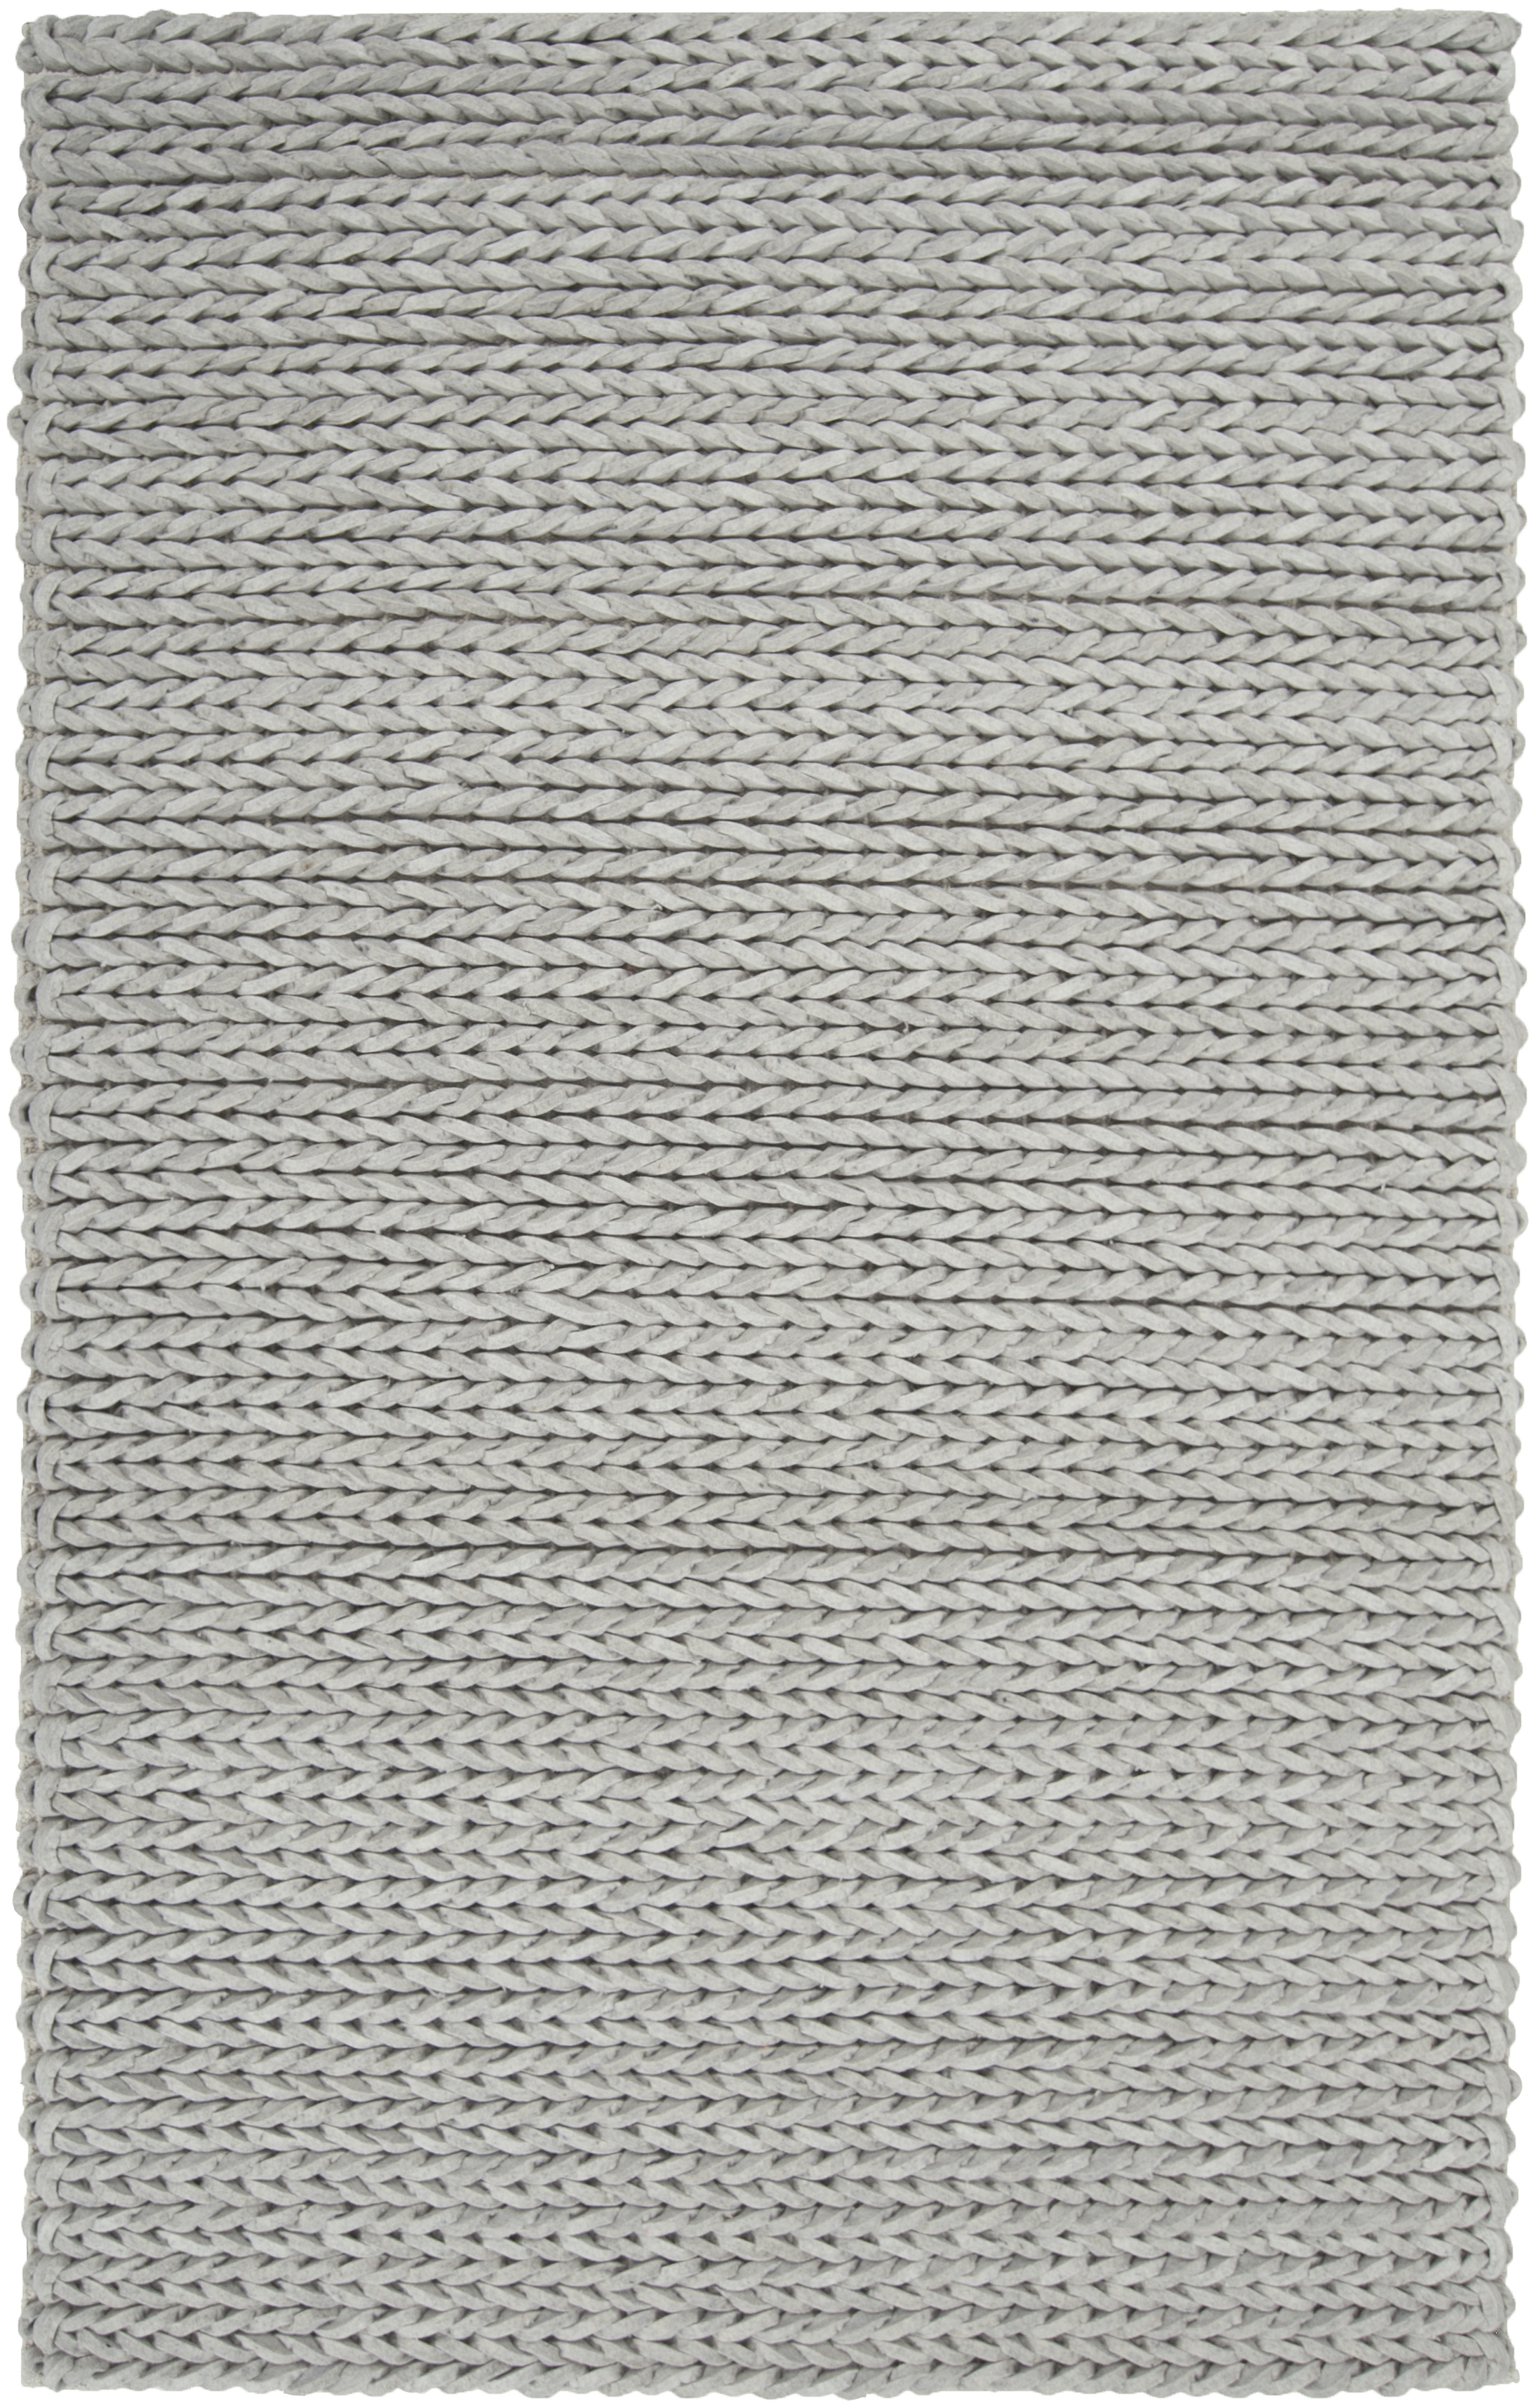 Anchorage Rug, 9' x 12' - Image 0